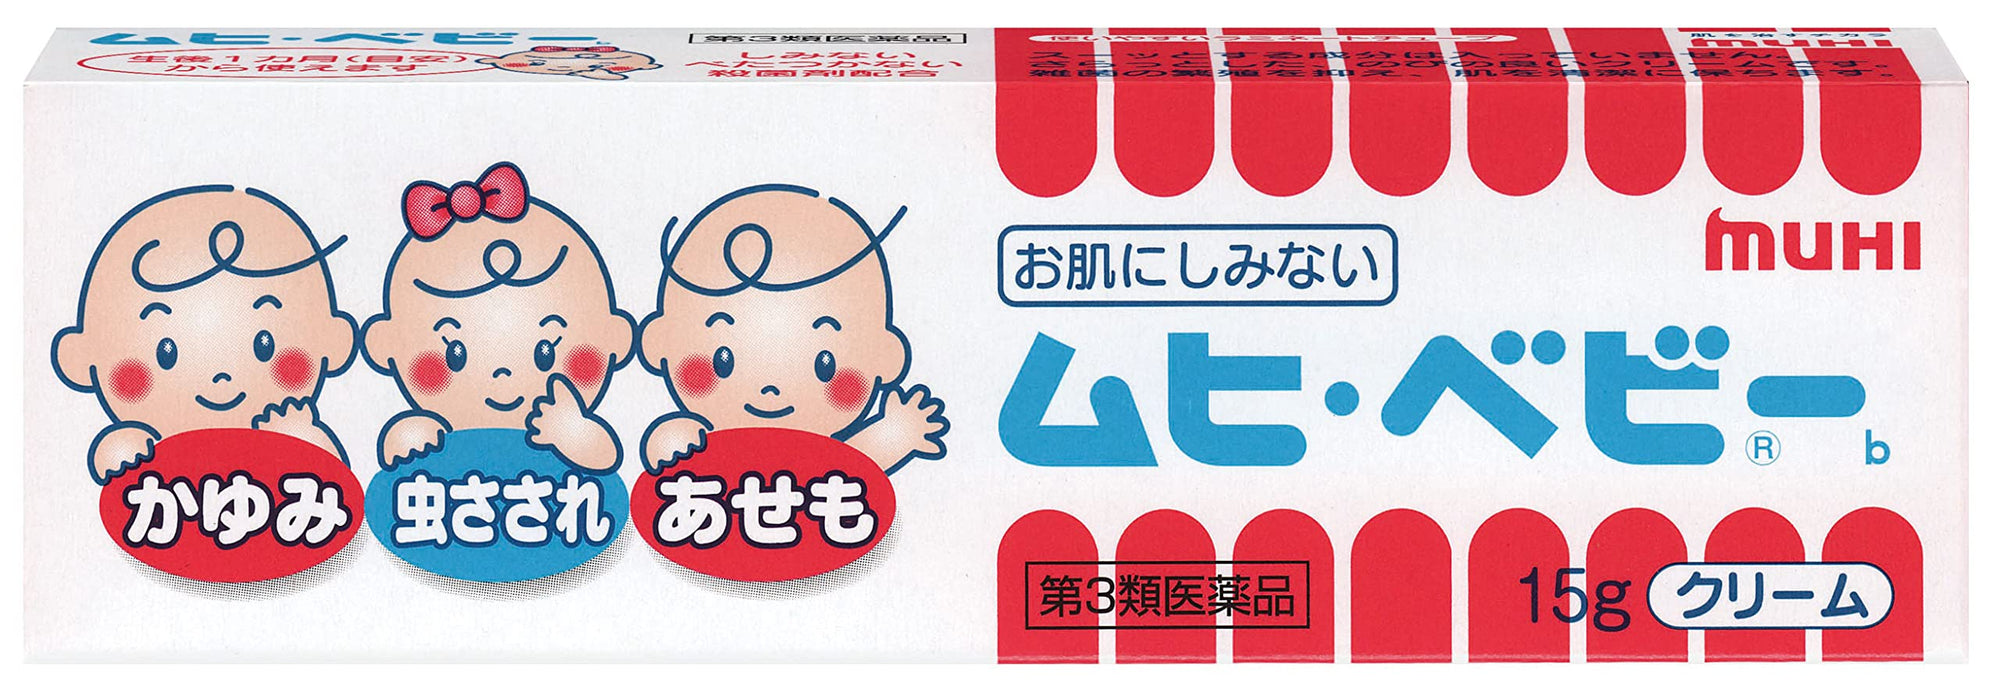 Ikeda Model Hall Muhi Baby B 15G [Third-Class OTC Drug] for Infants